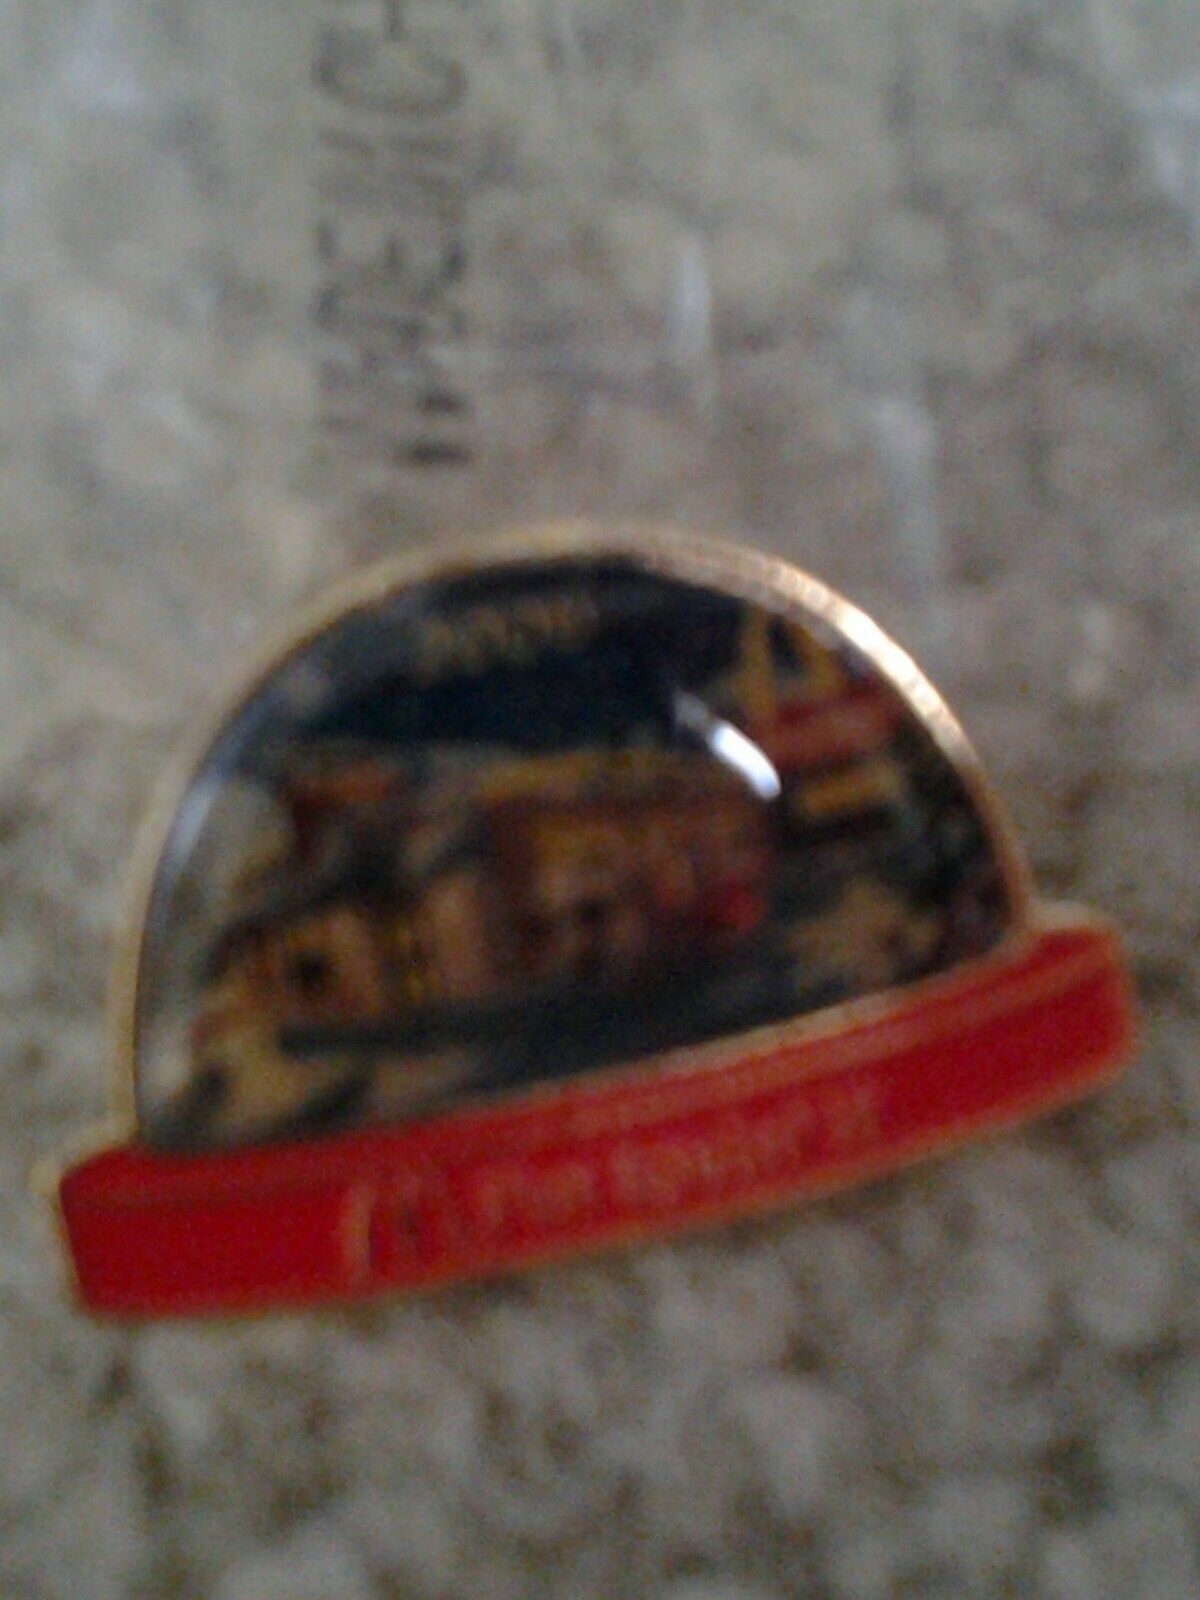 McDonald\'s Restaurant I\'M LOVIN IT dated 2006 Collectible Metal Lapel Pin